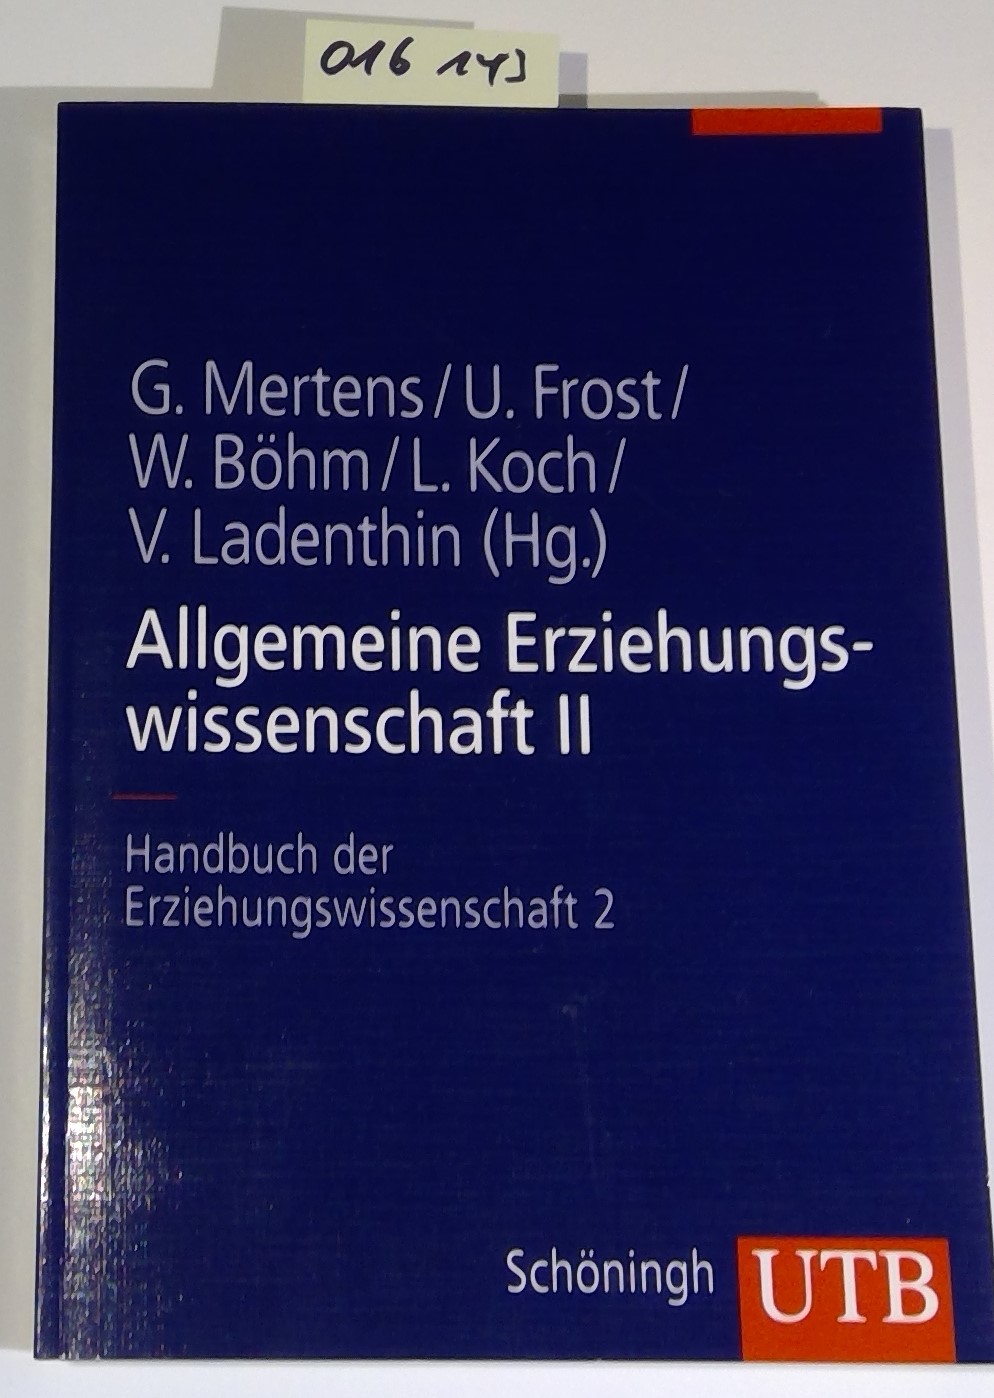 Allgemeine Erziehungswissenschaft II - Handbuch der Erziehungswissenschaft 2 - UTB 8456 - Frost, Ursula; Böhm, Winfried; Koch, Lutz - Herausgeber